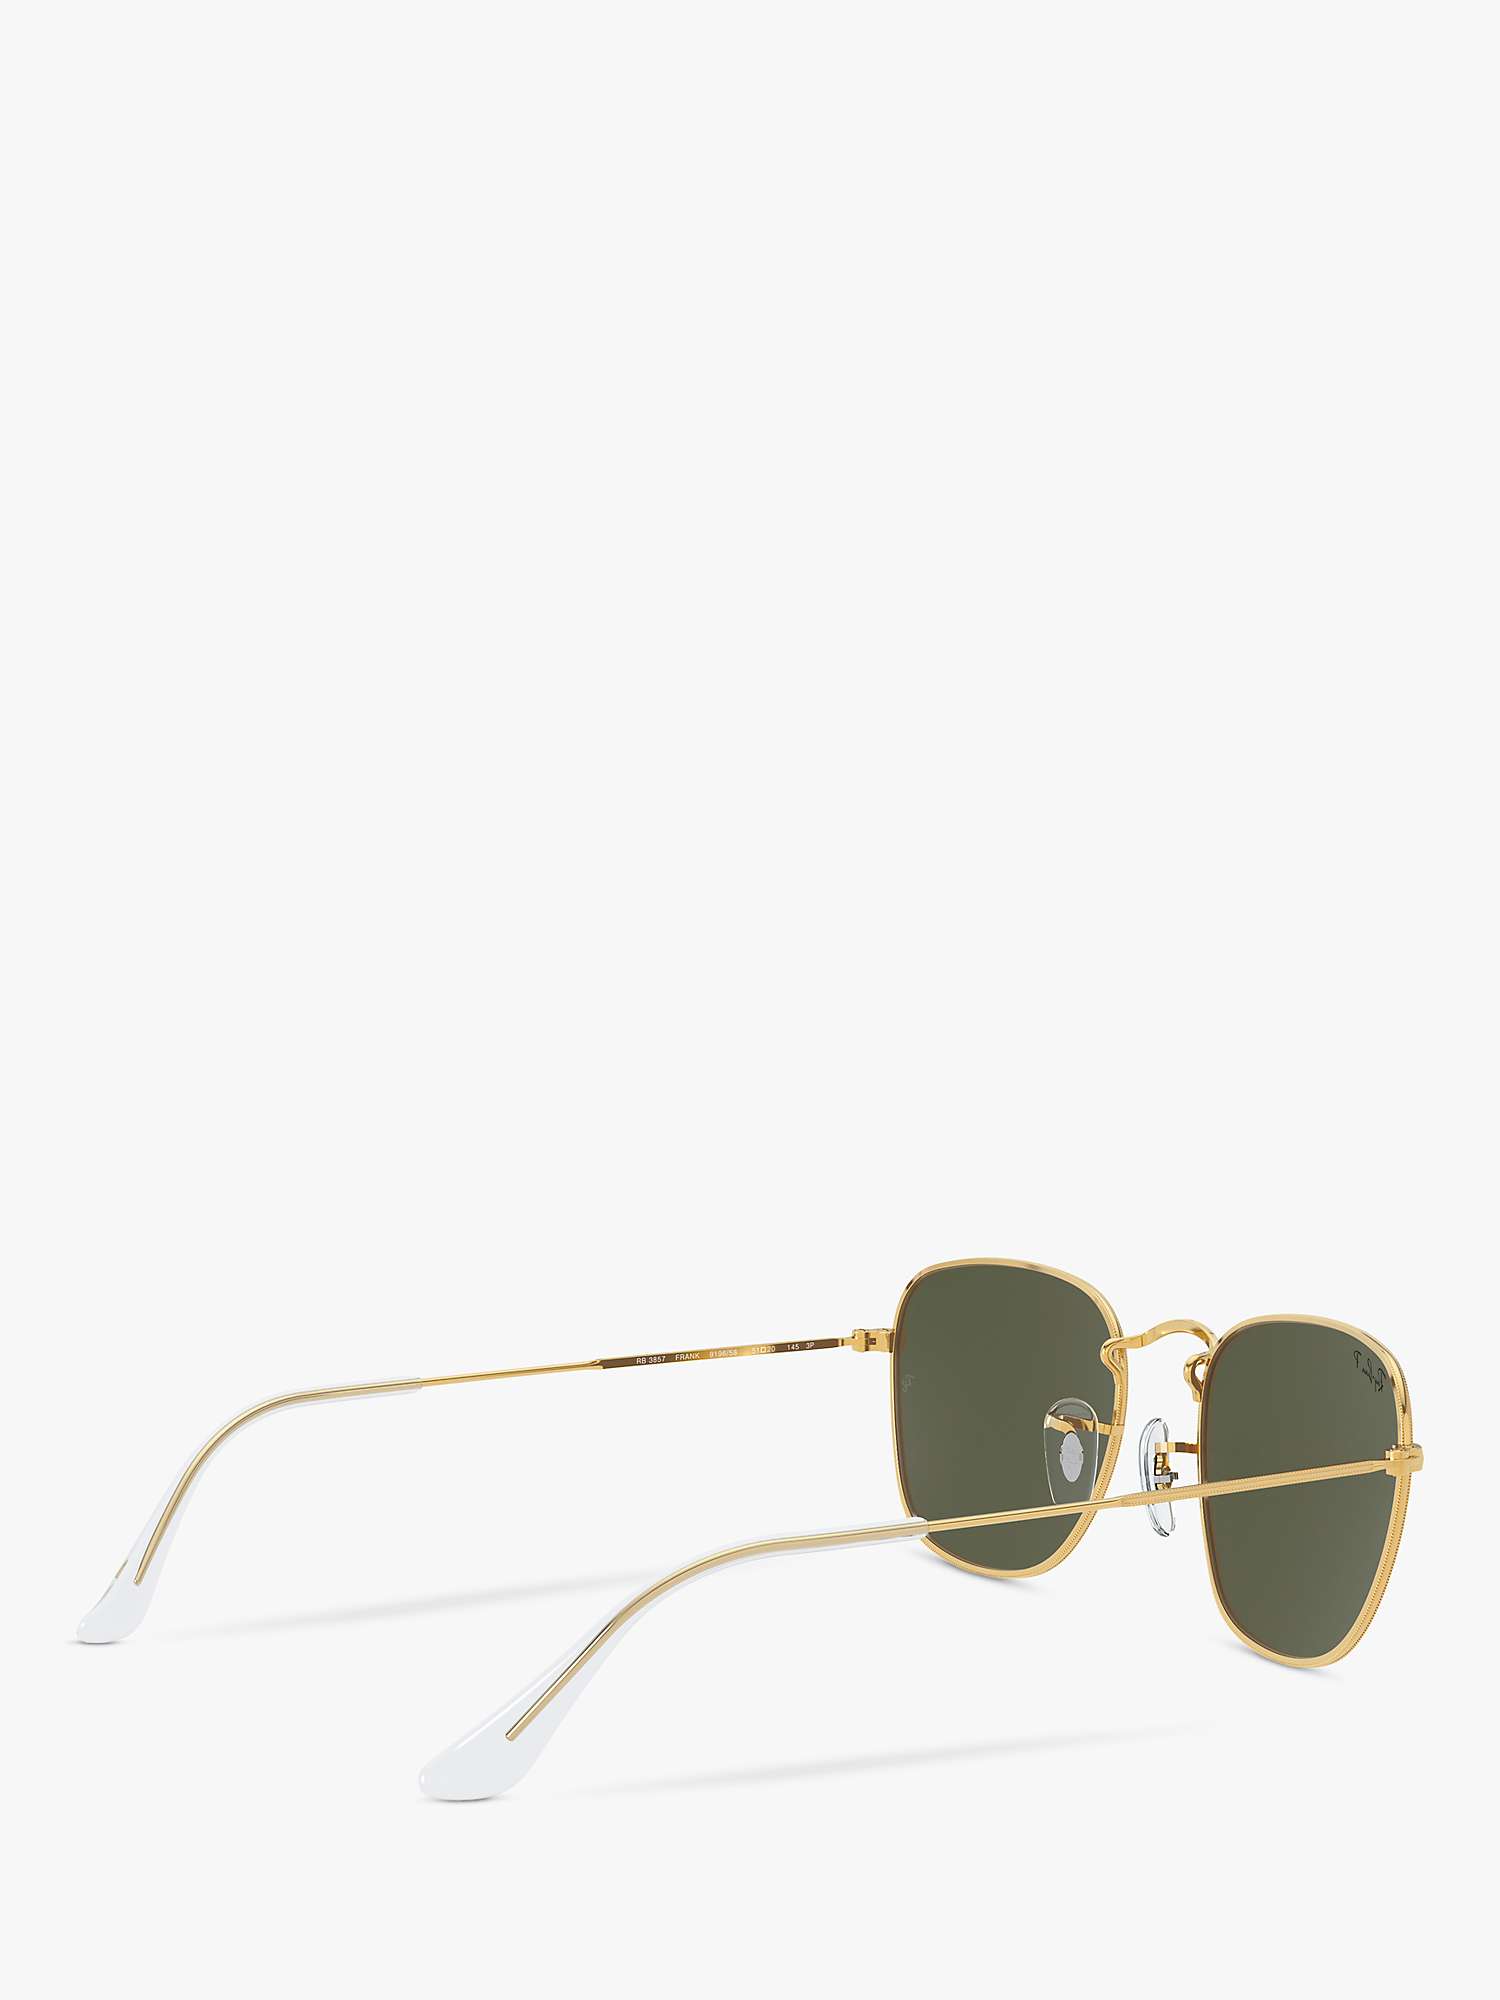 Buy Ray-Ban RB3857 Unisex Polarised Square Sunglasses, Legend Gold Online at johnlewis.com